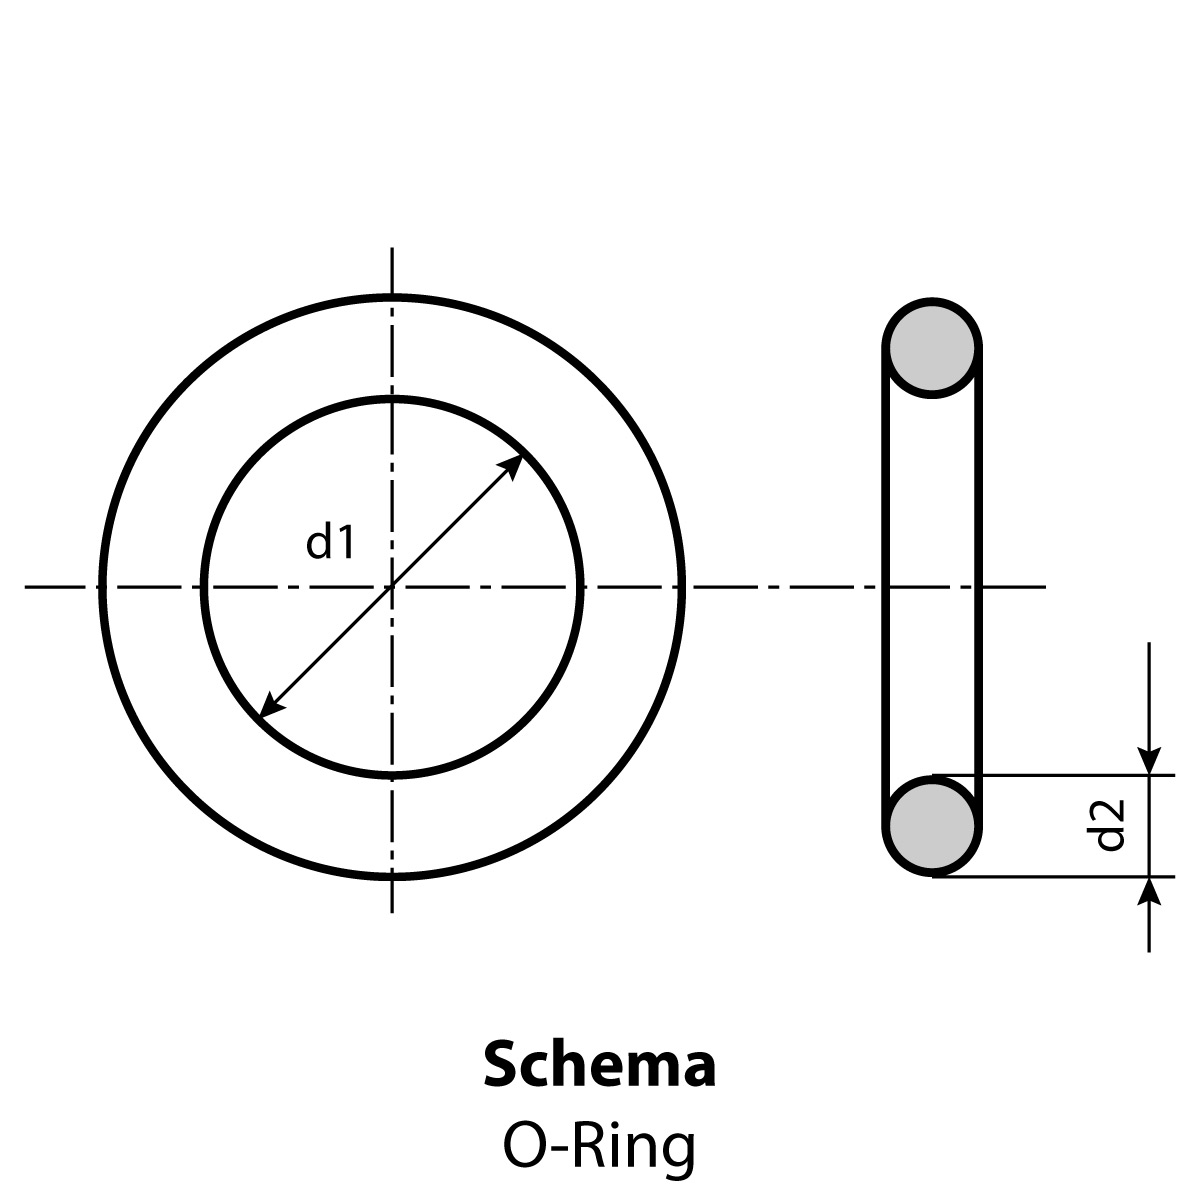 Dichtring / O-Ring 19,5 x 1,5 mm FKM 80 schwarz oder braun